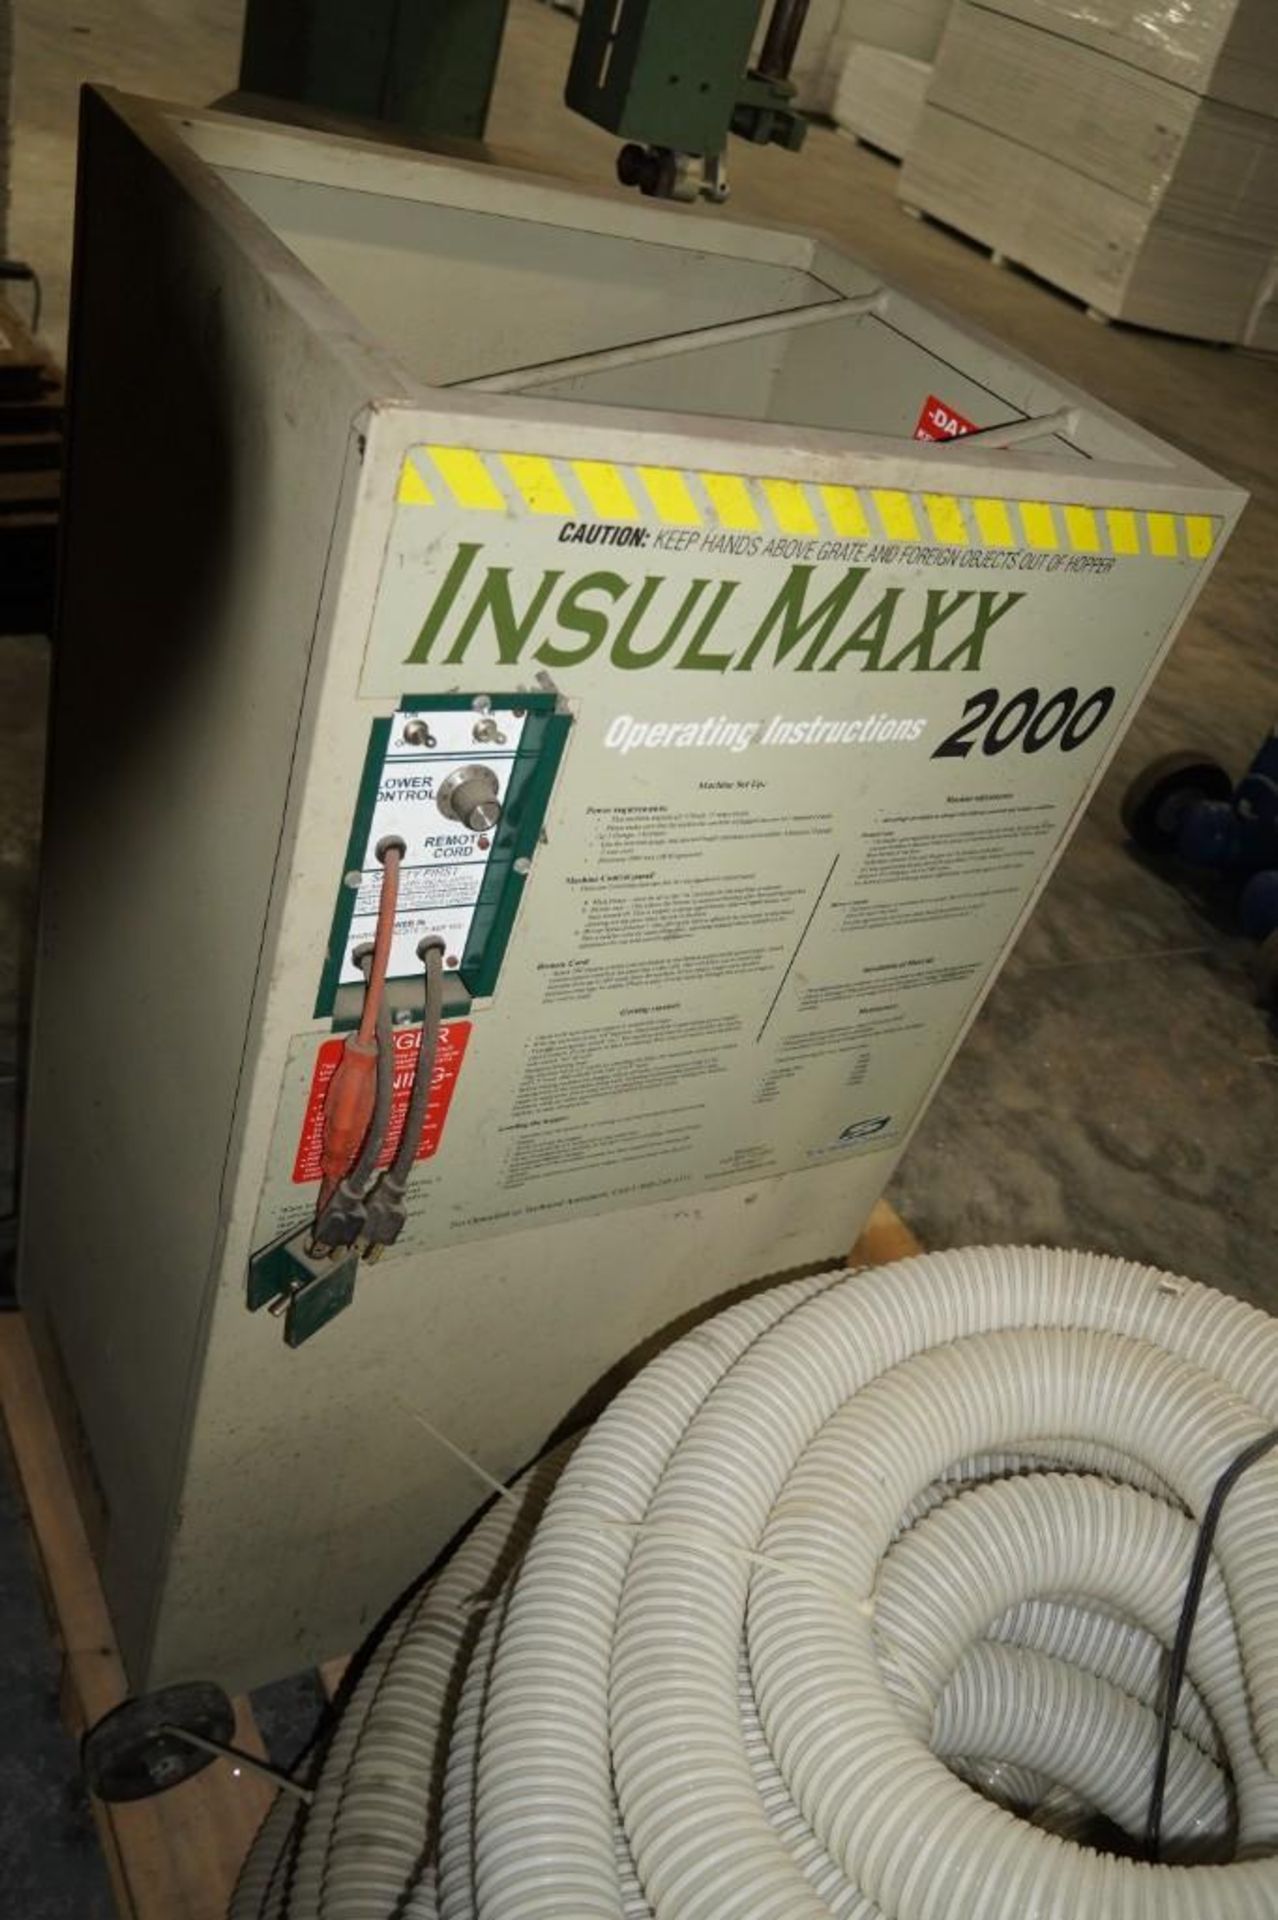 Insulmax 2000 - Image 9 of 11